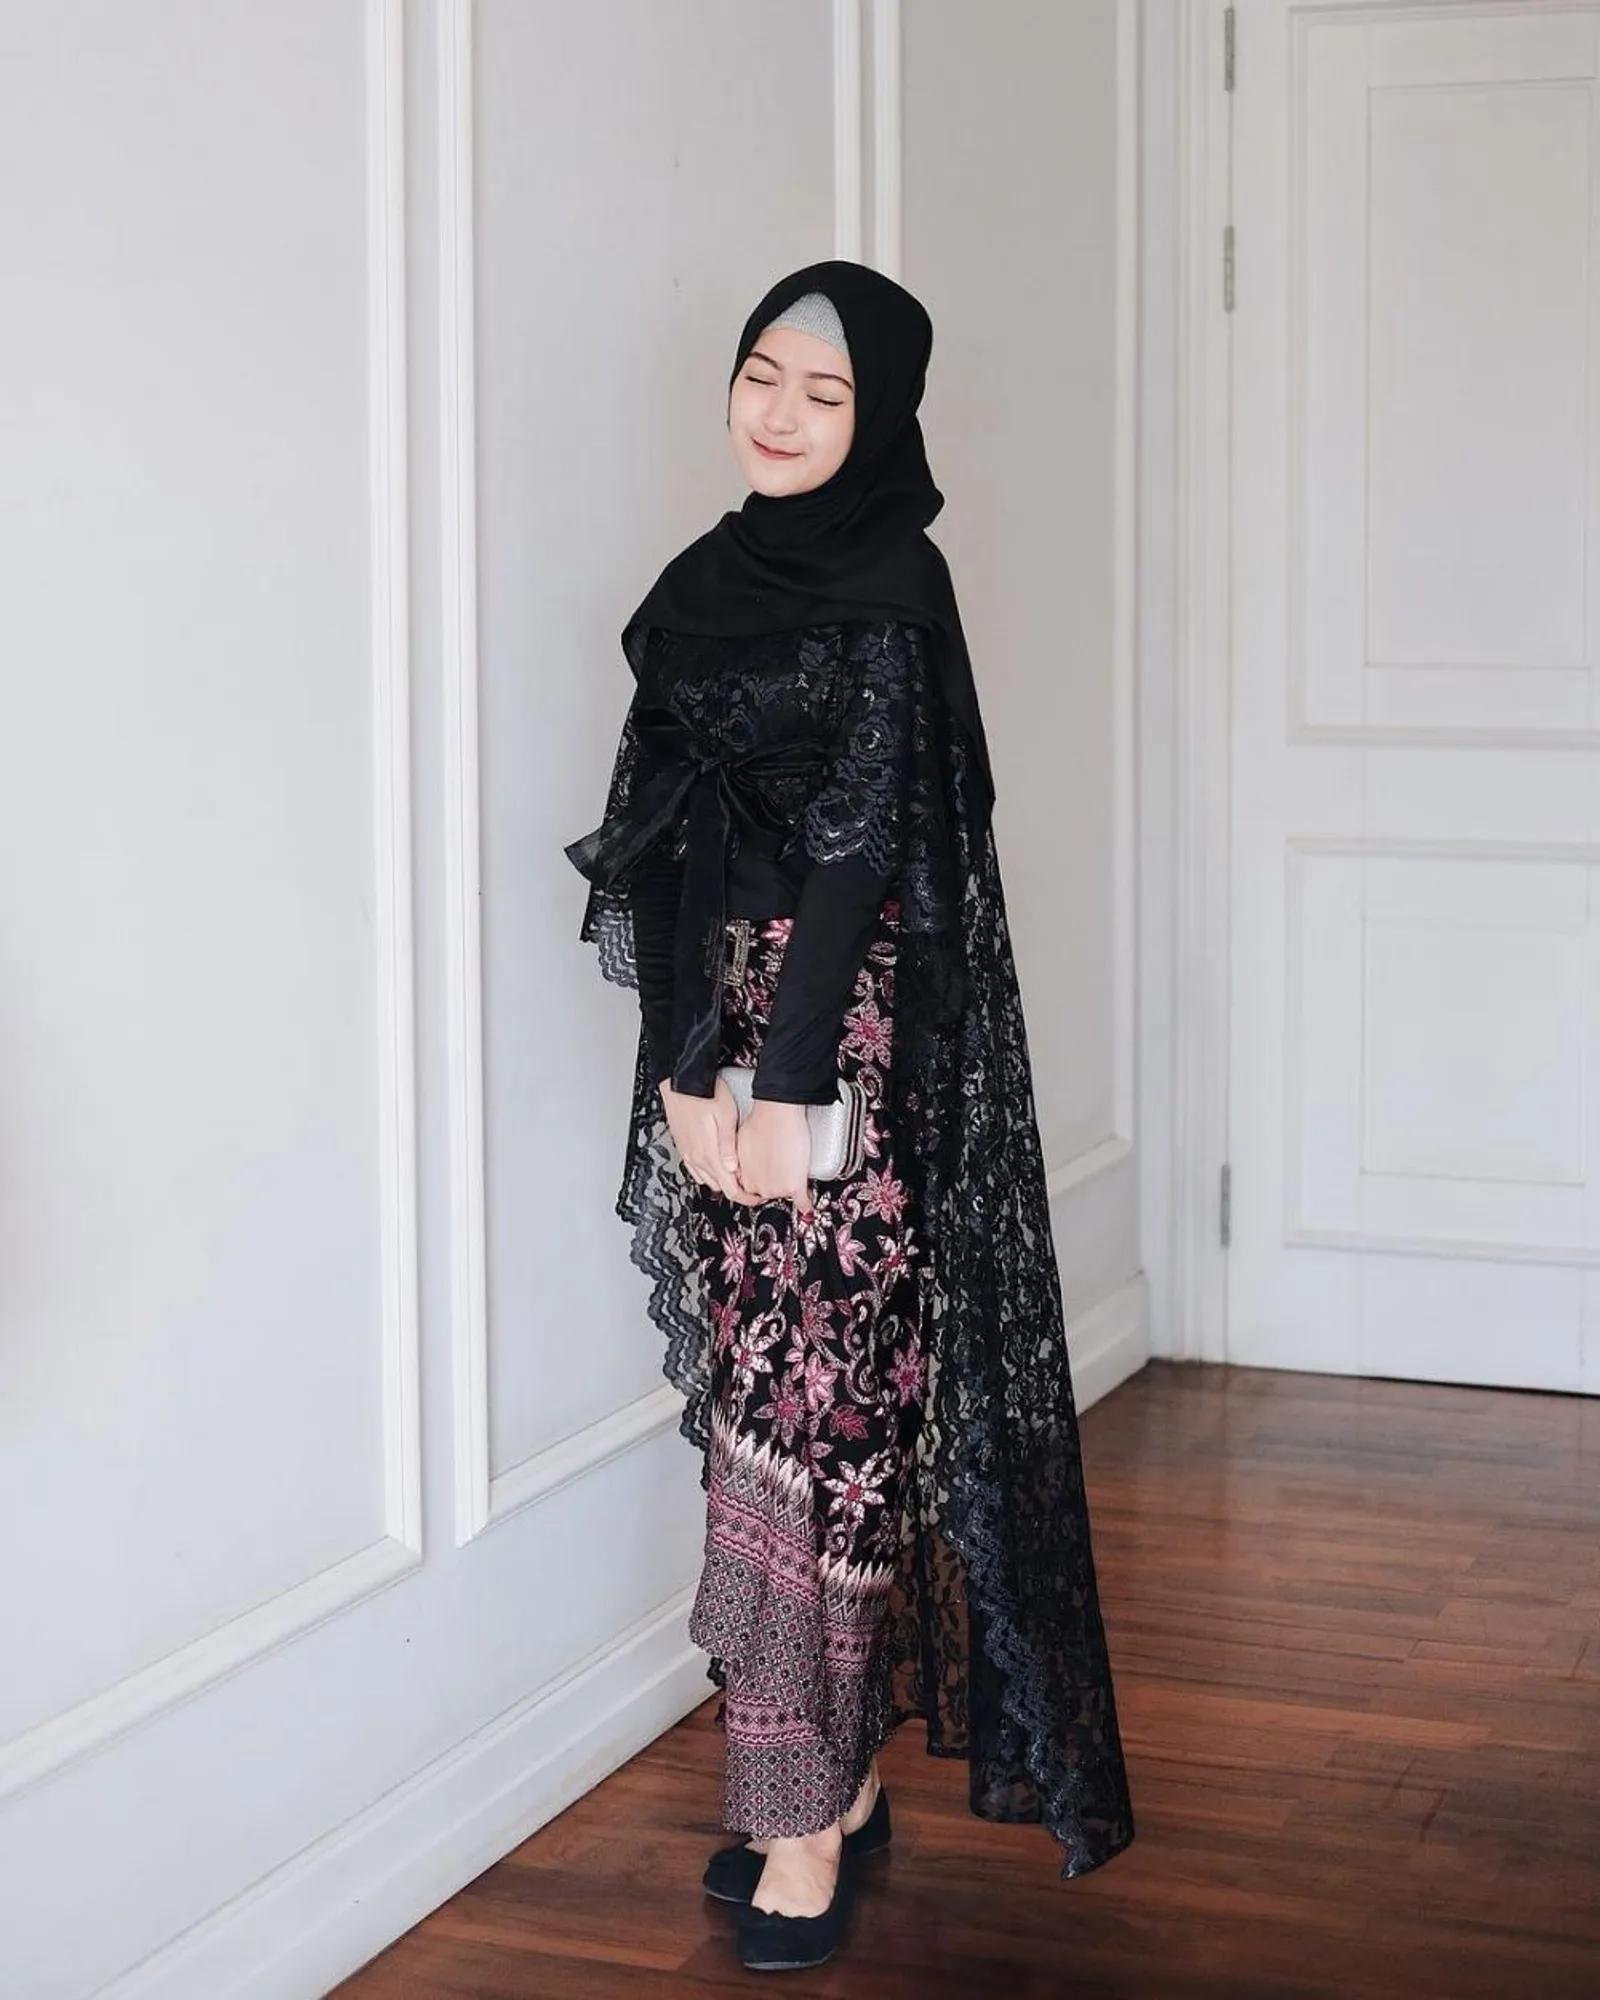 Tips Padu-padan OOTD Hijab ke Pesta dengan Kebaya Hitam